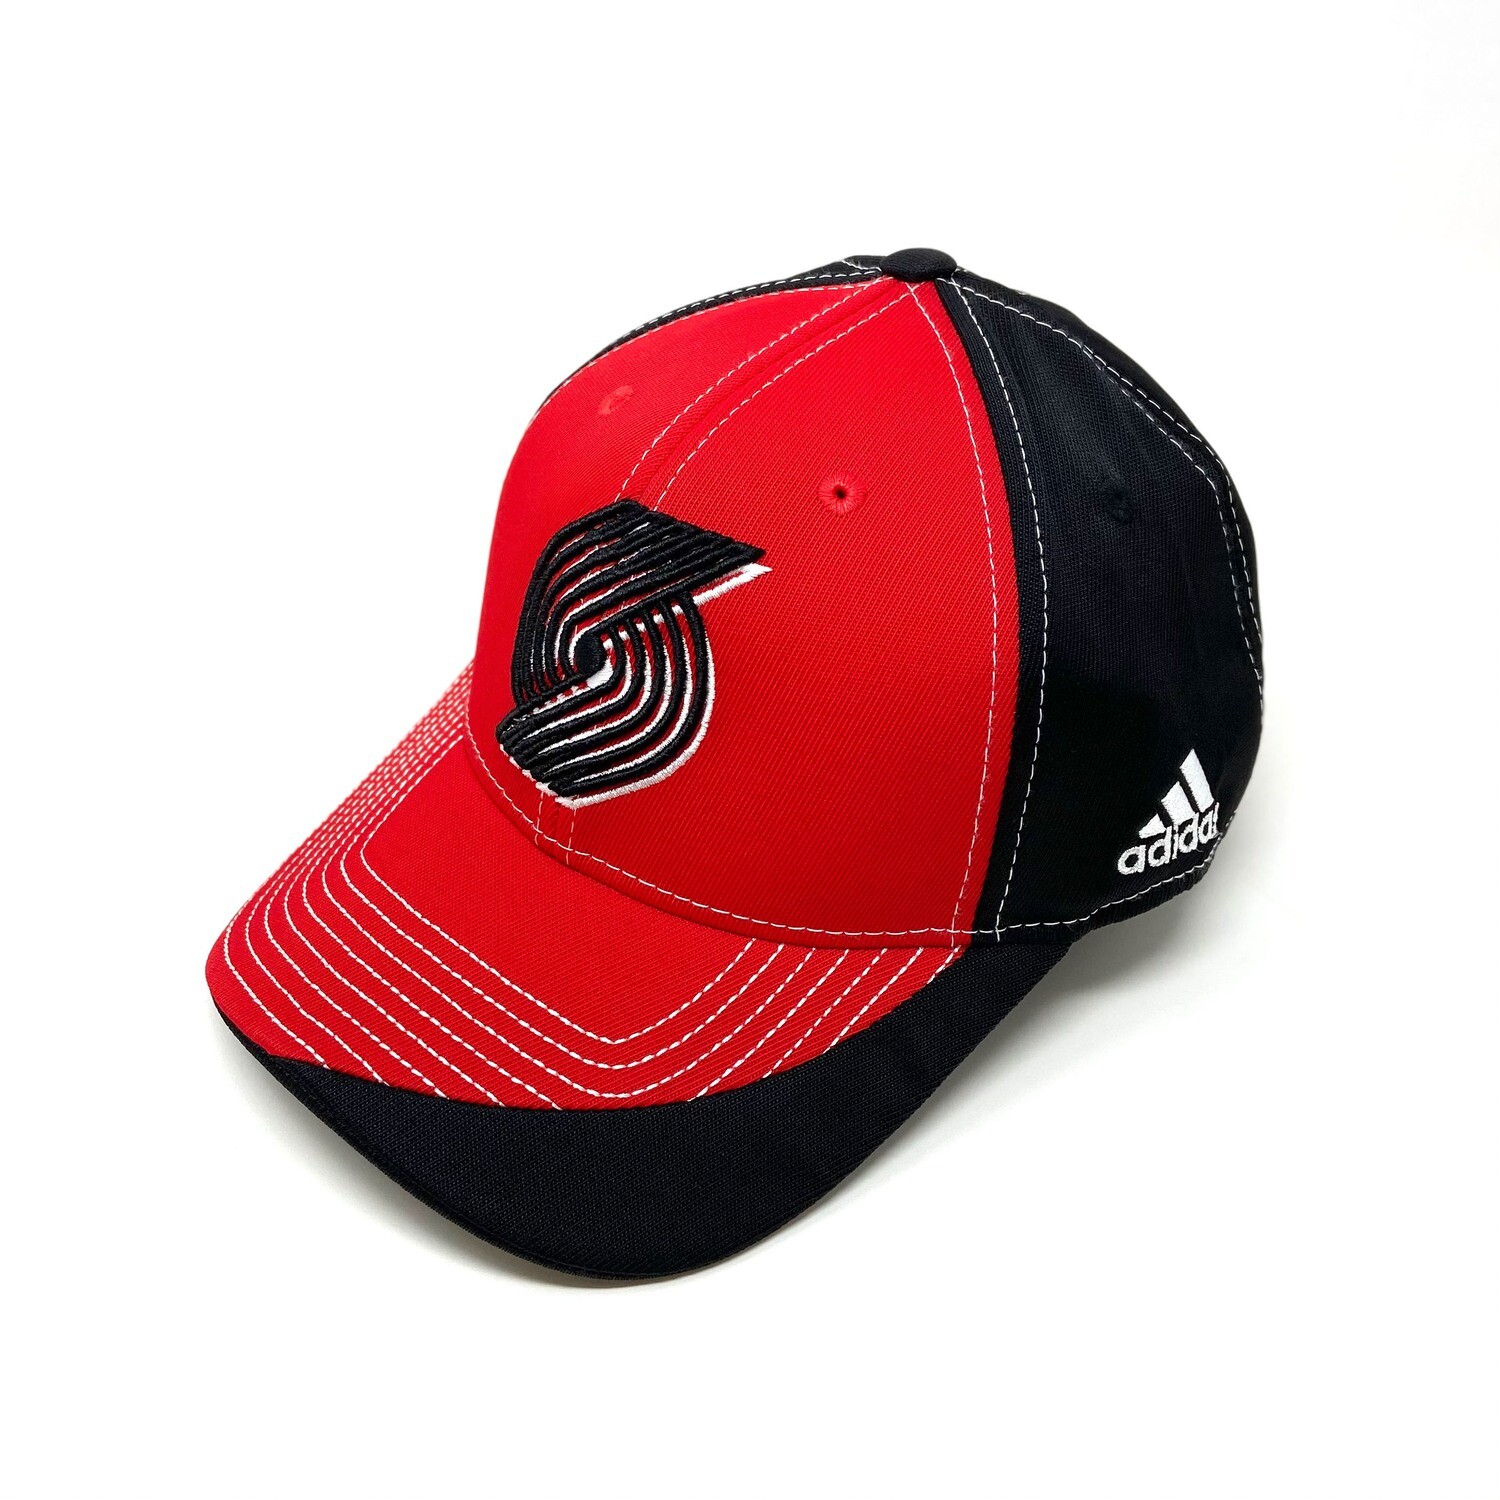 Portland Trail Blazers Men's Adidas Adjustable Hat